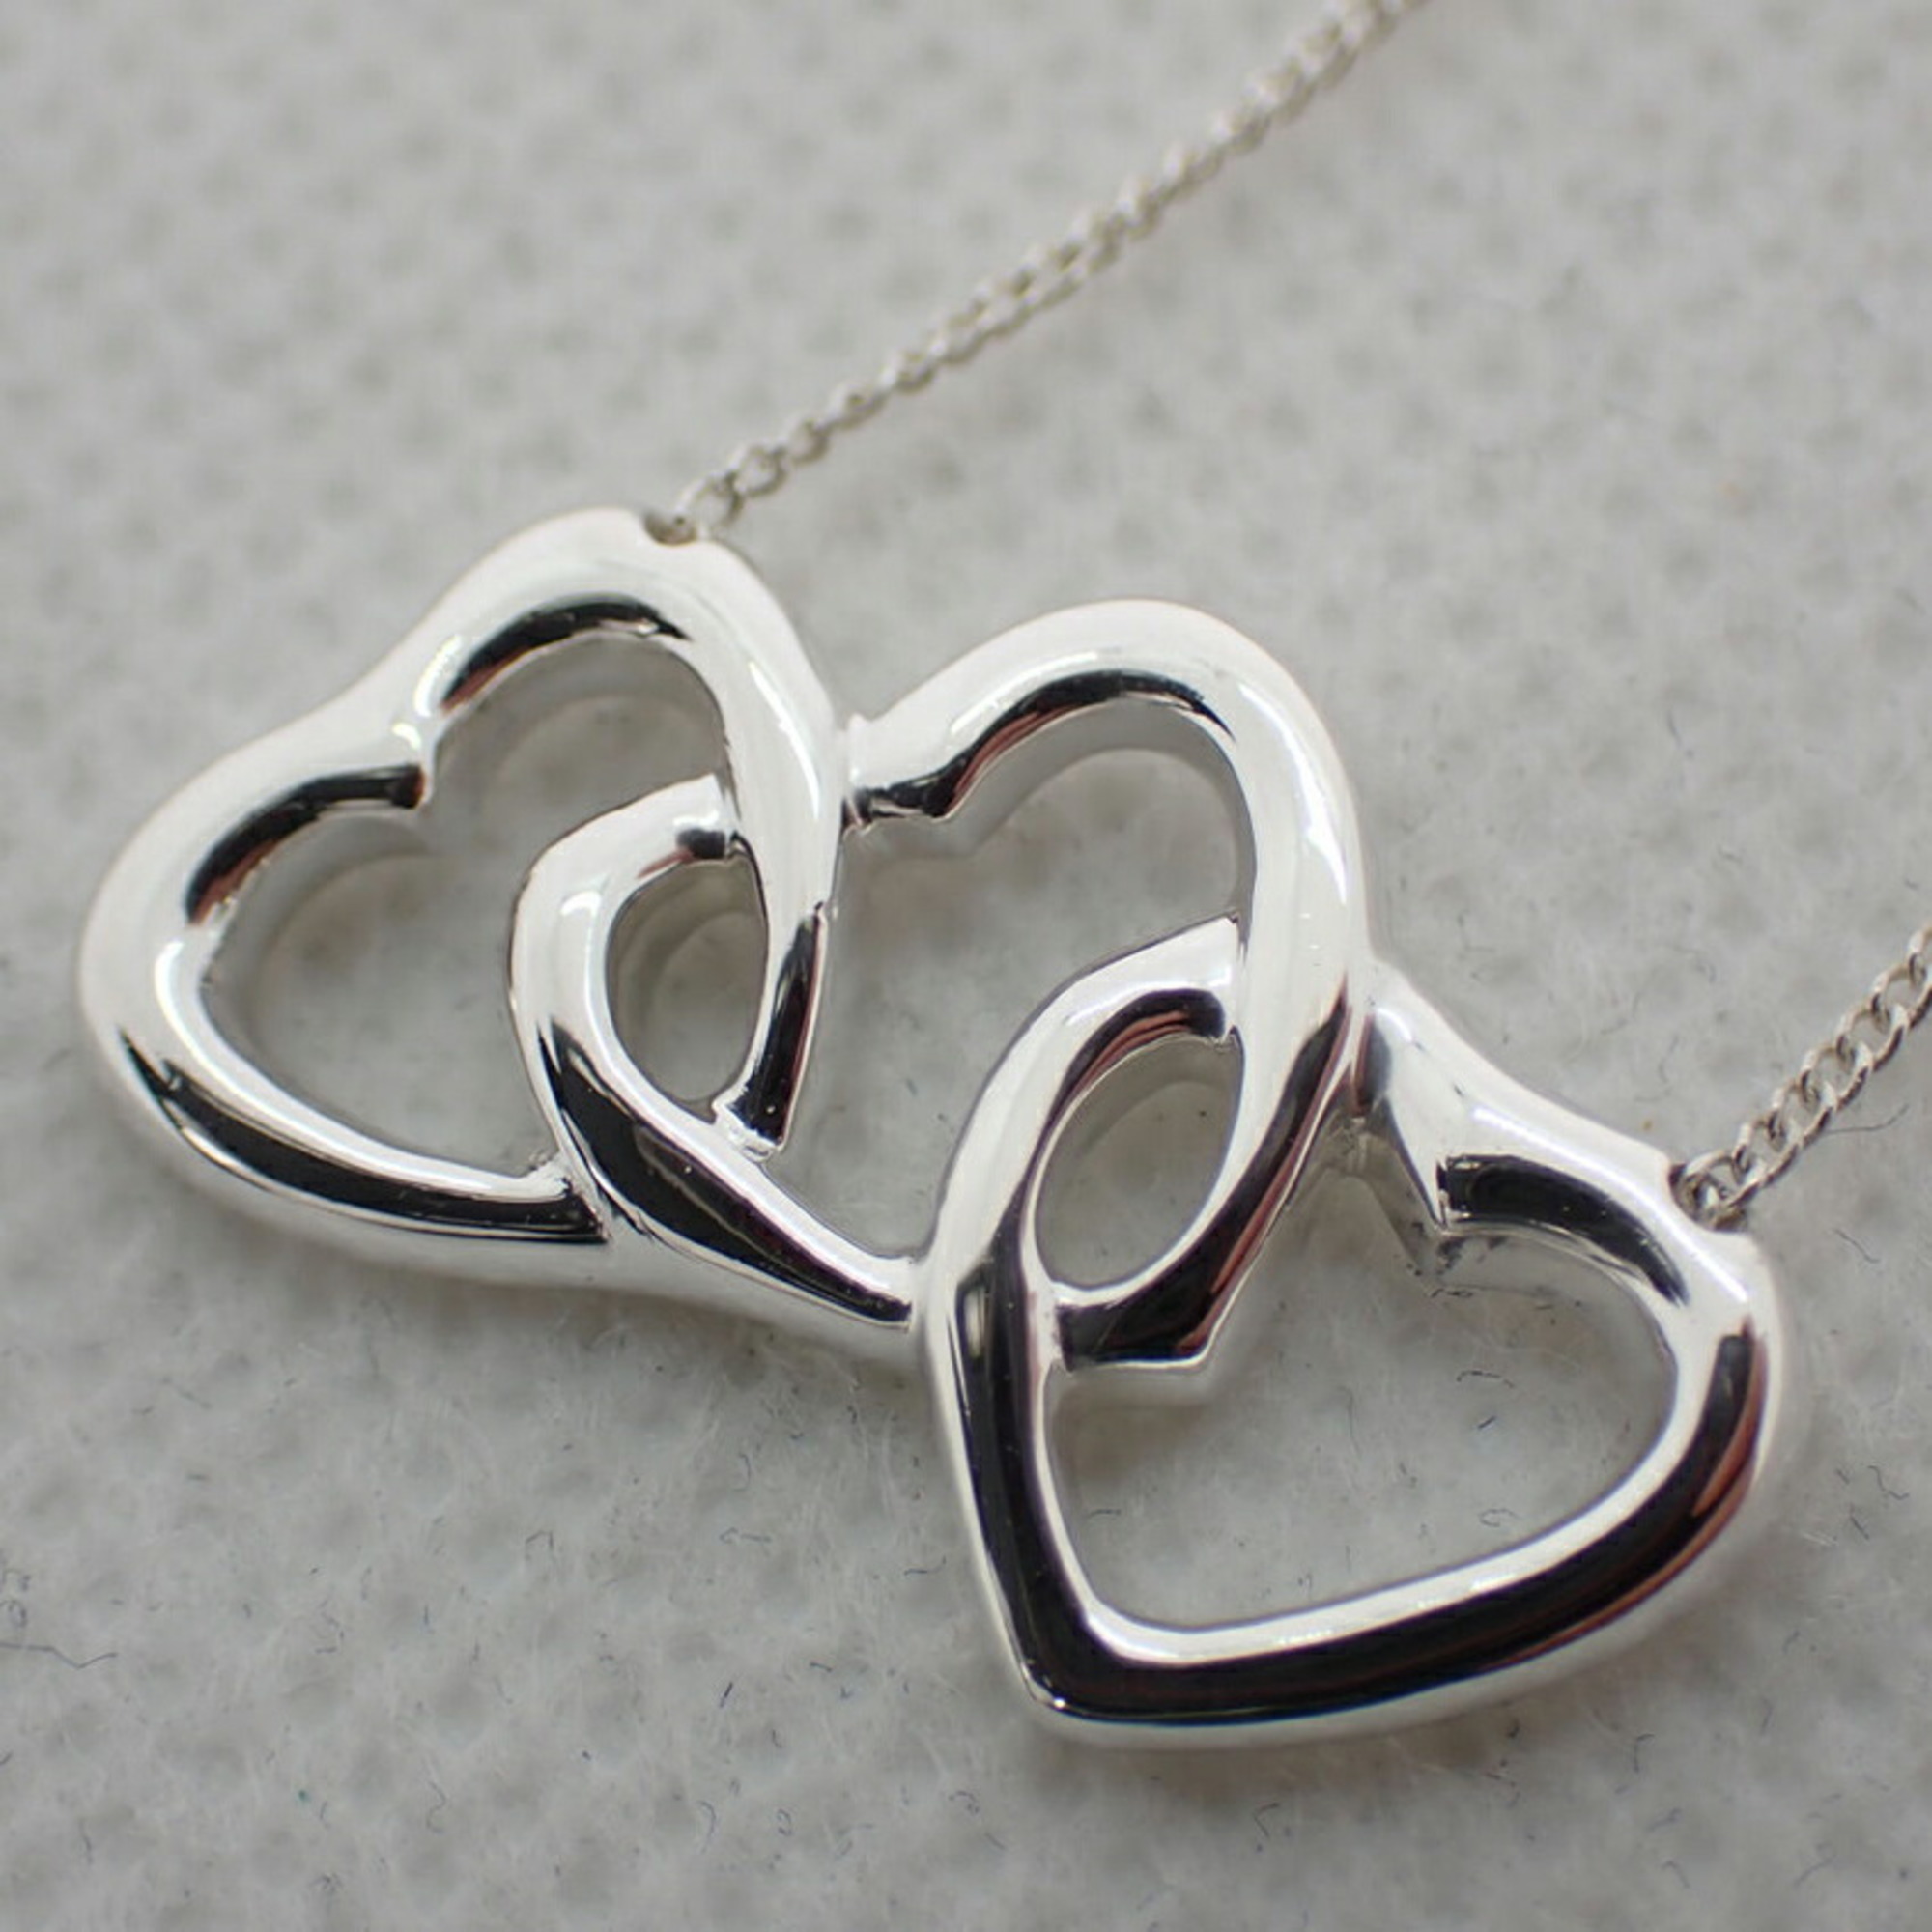 TIFFANY 925 triple heart pendant necklace